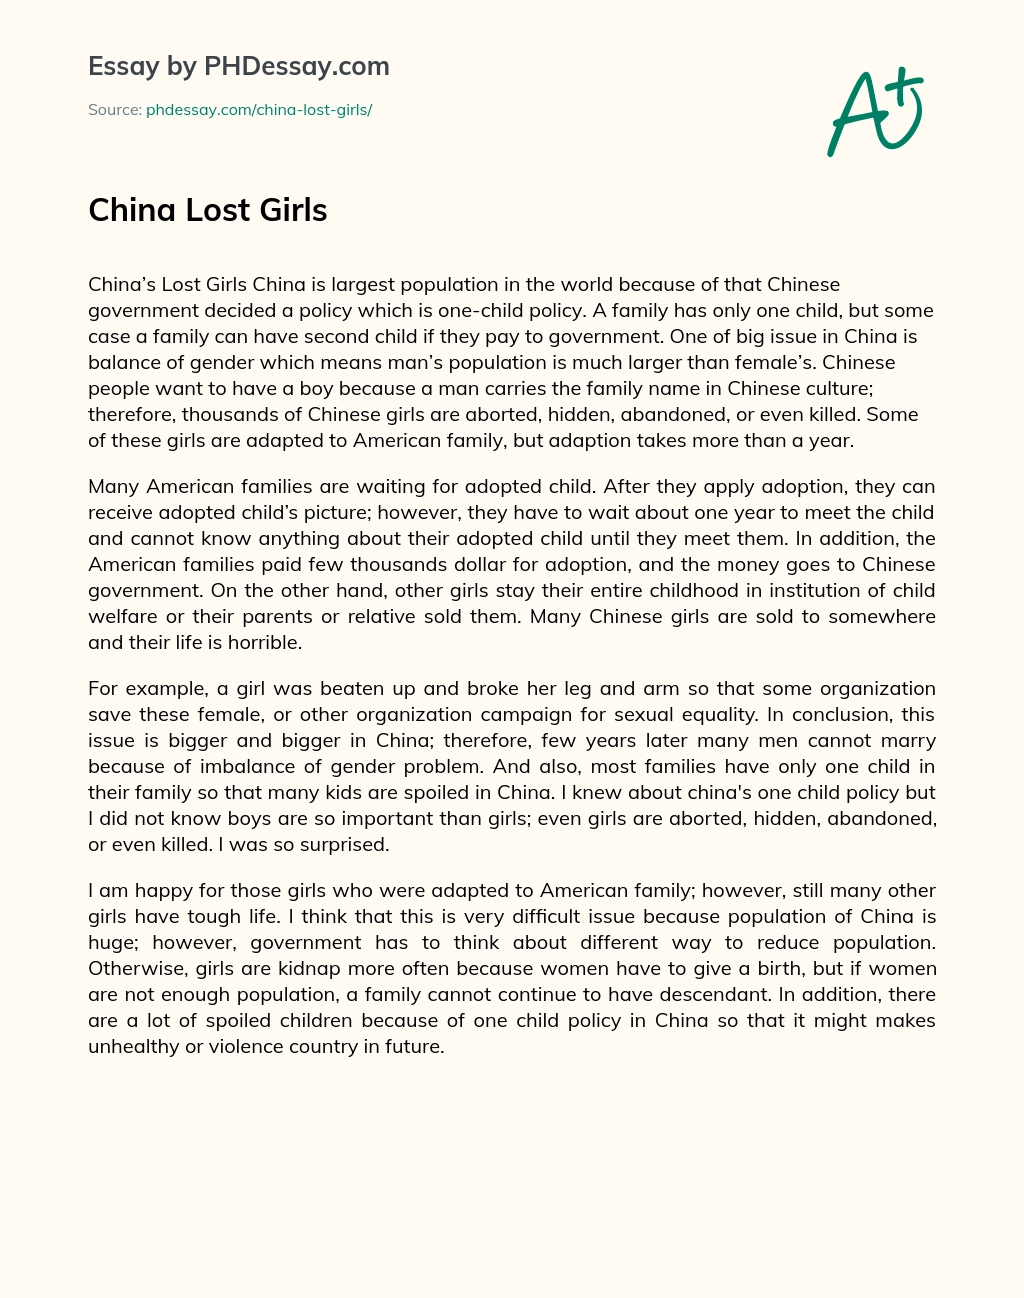 China Lost Girls essay